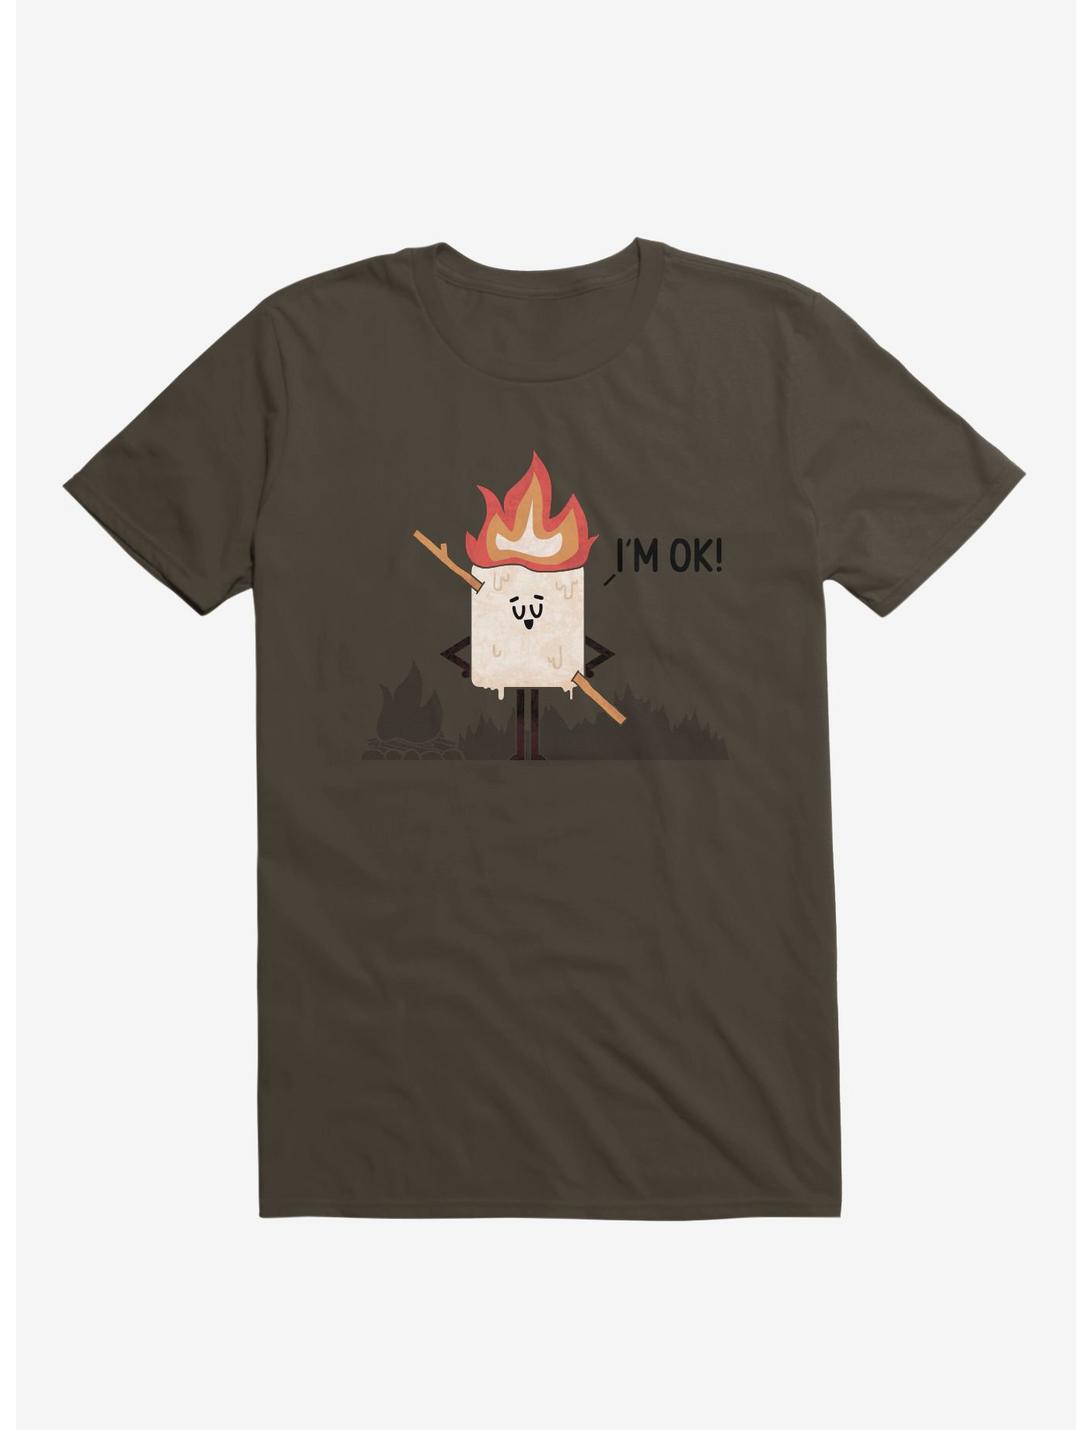 I'm OK! Campfire S'more Brown T-Shirt, BROWN, hi-res